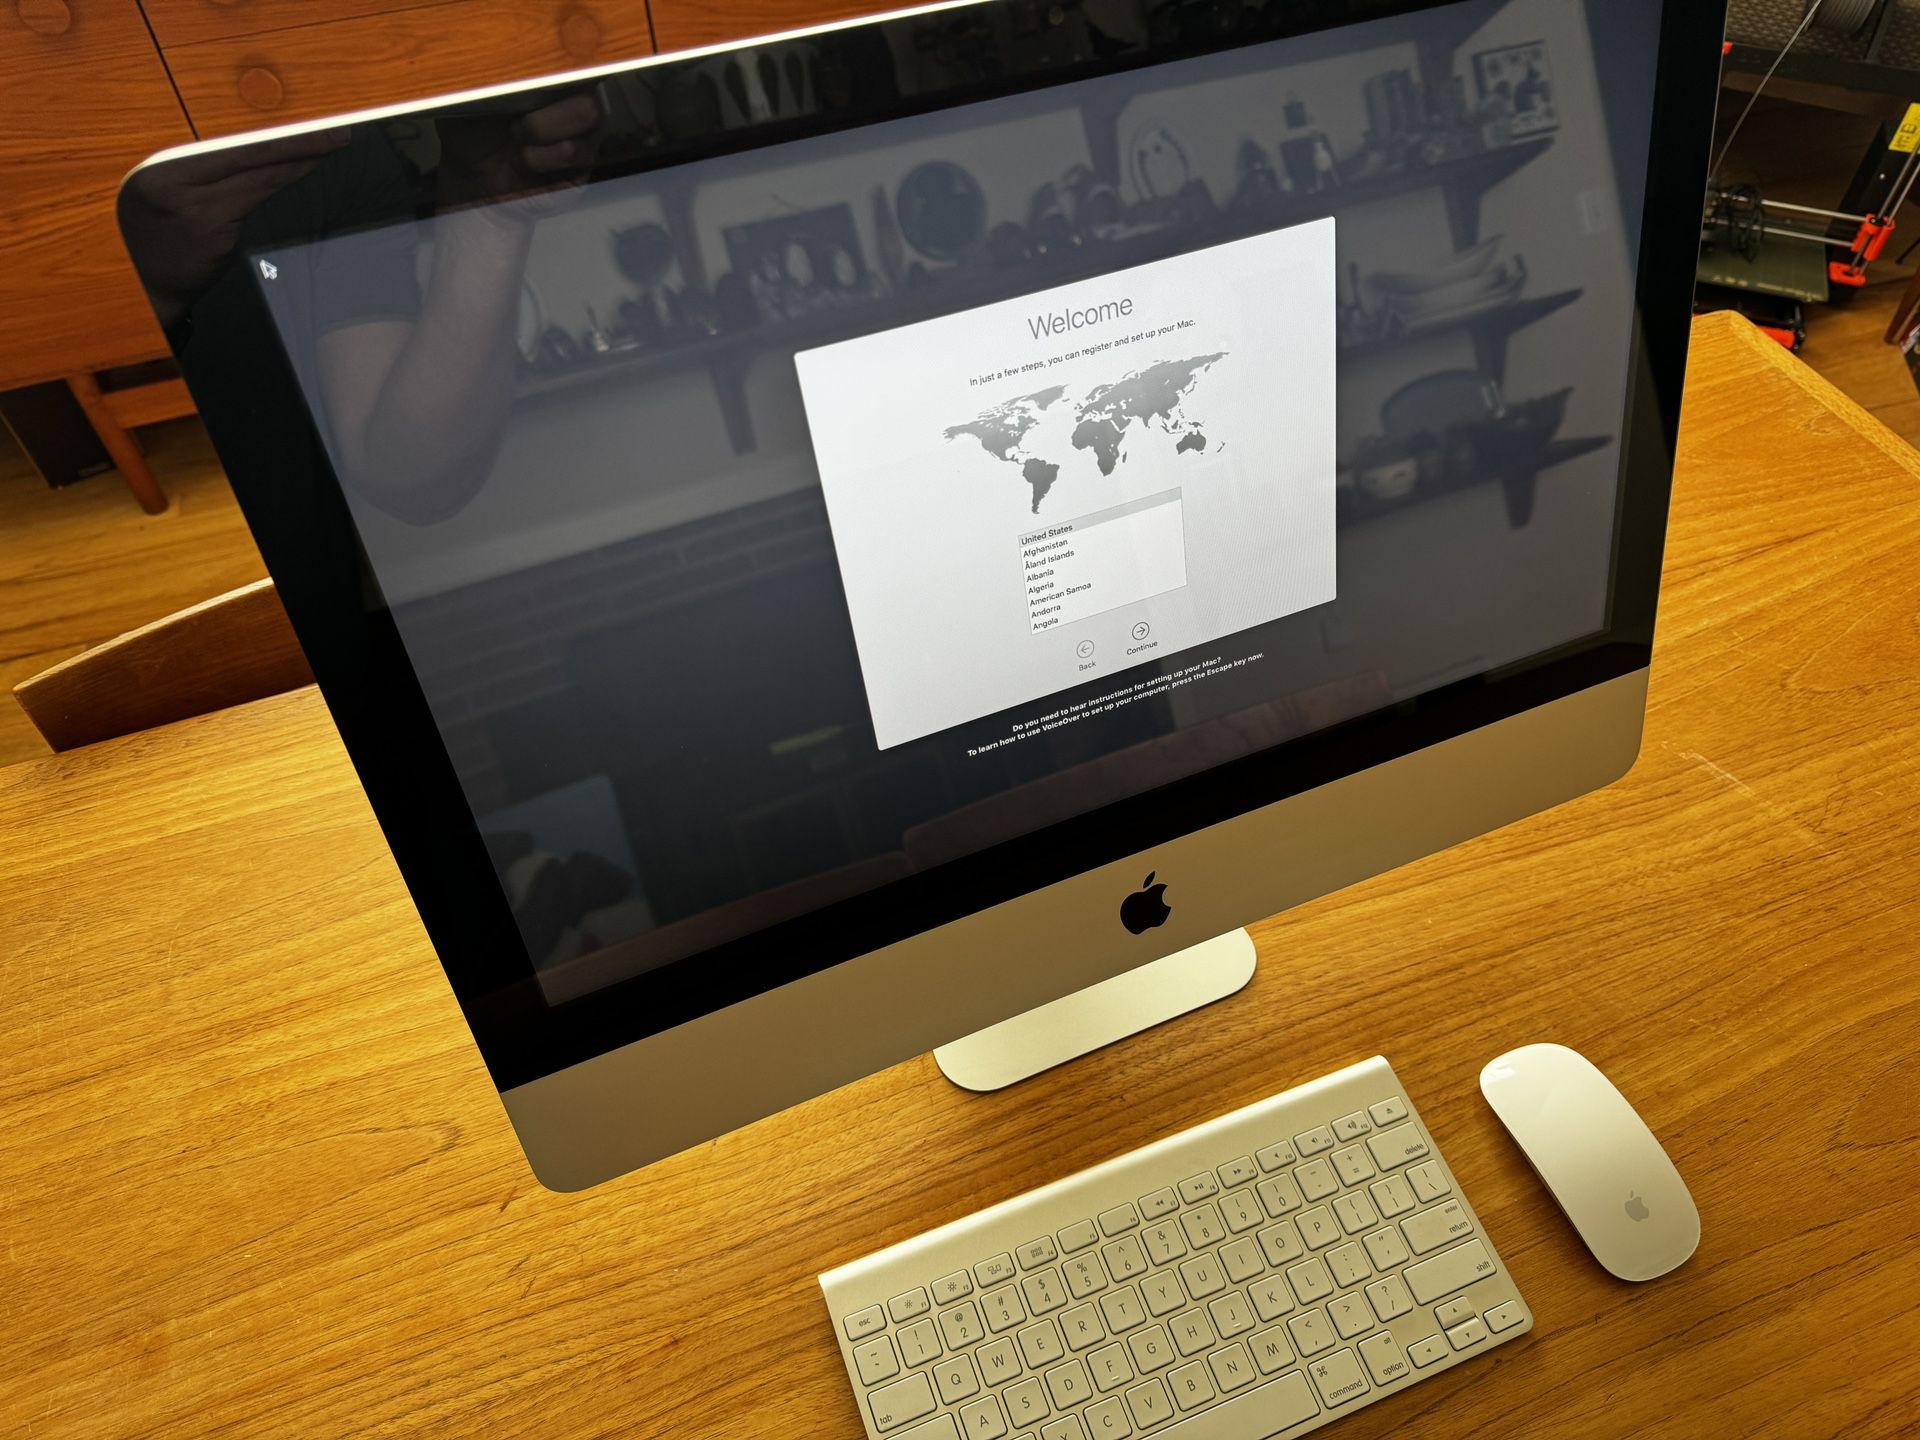 iMac 21.5" (2011)